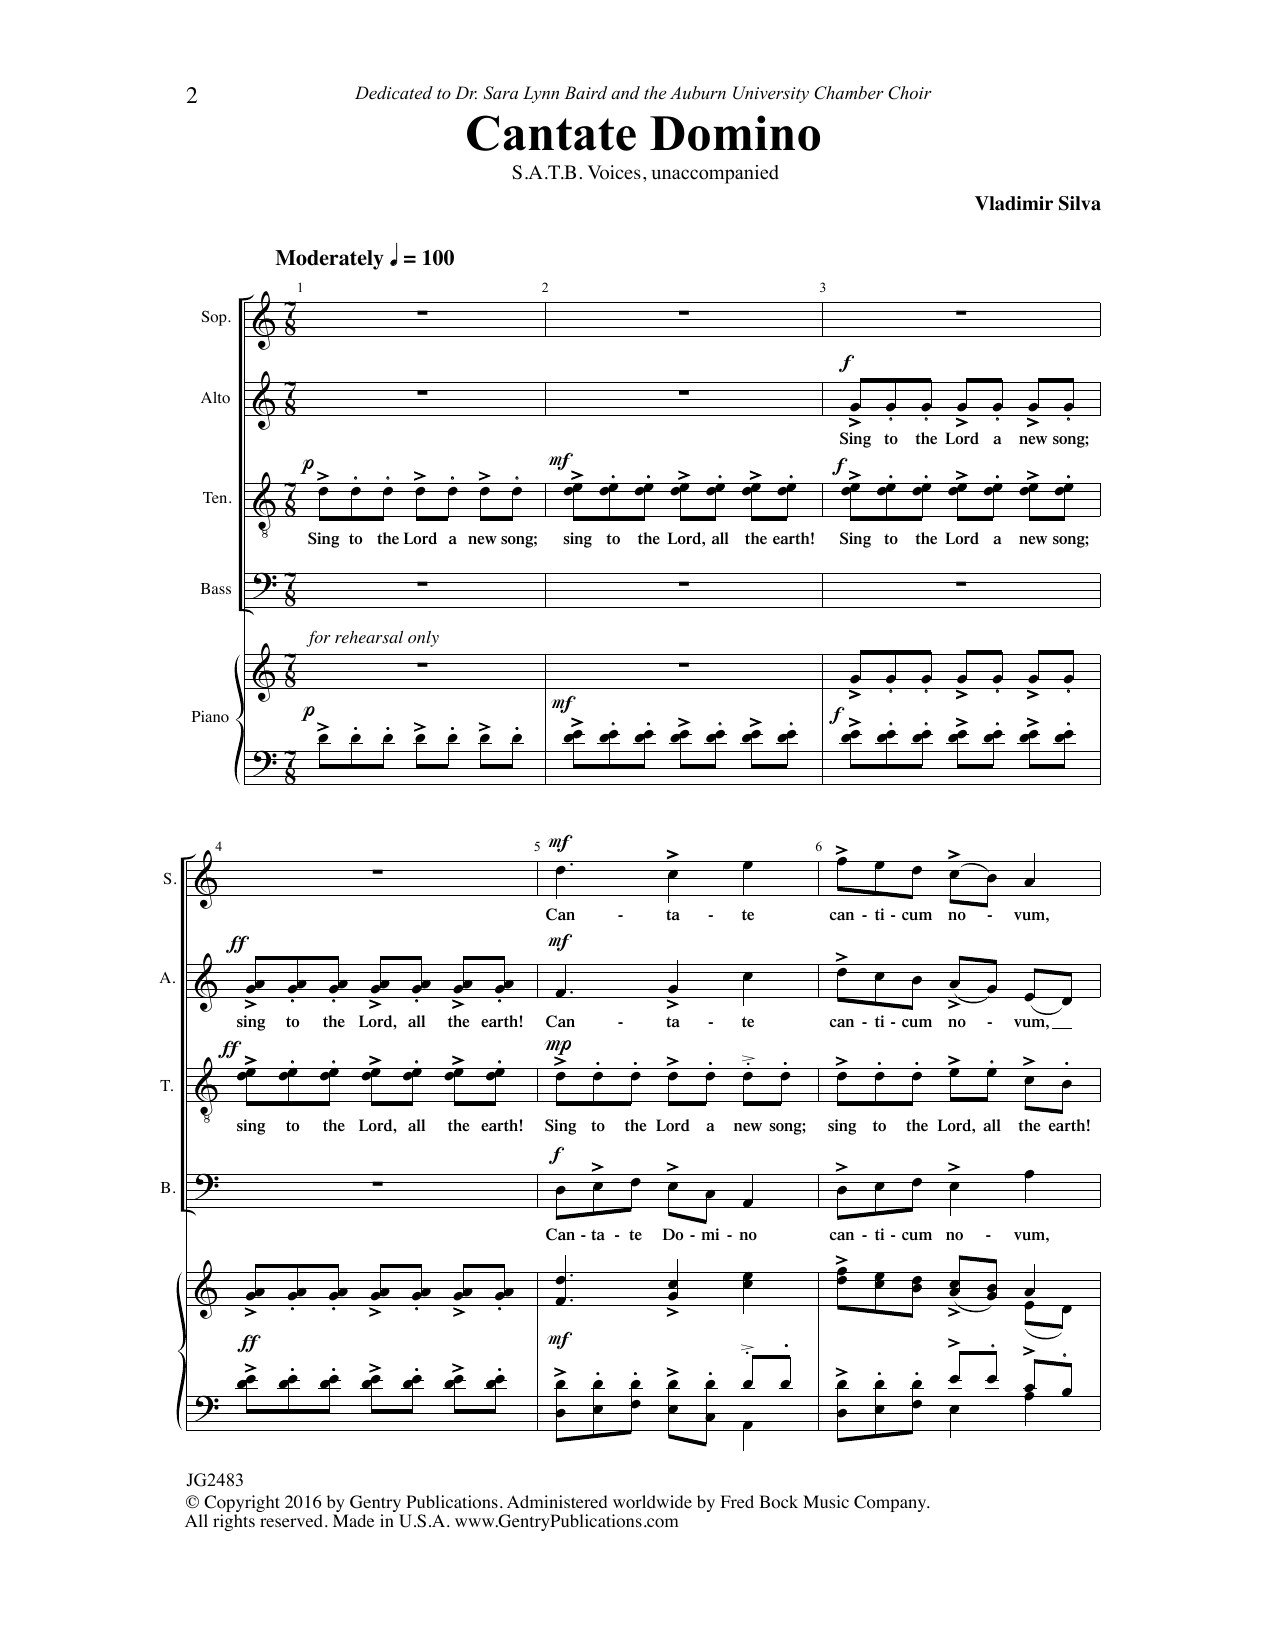 Vladimir Silva Cantate Domino Sheet Music Notes & Chords for Choral - Download or Print PDF